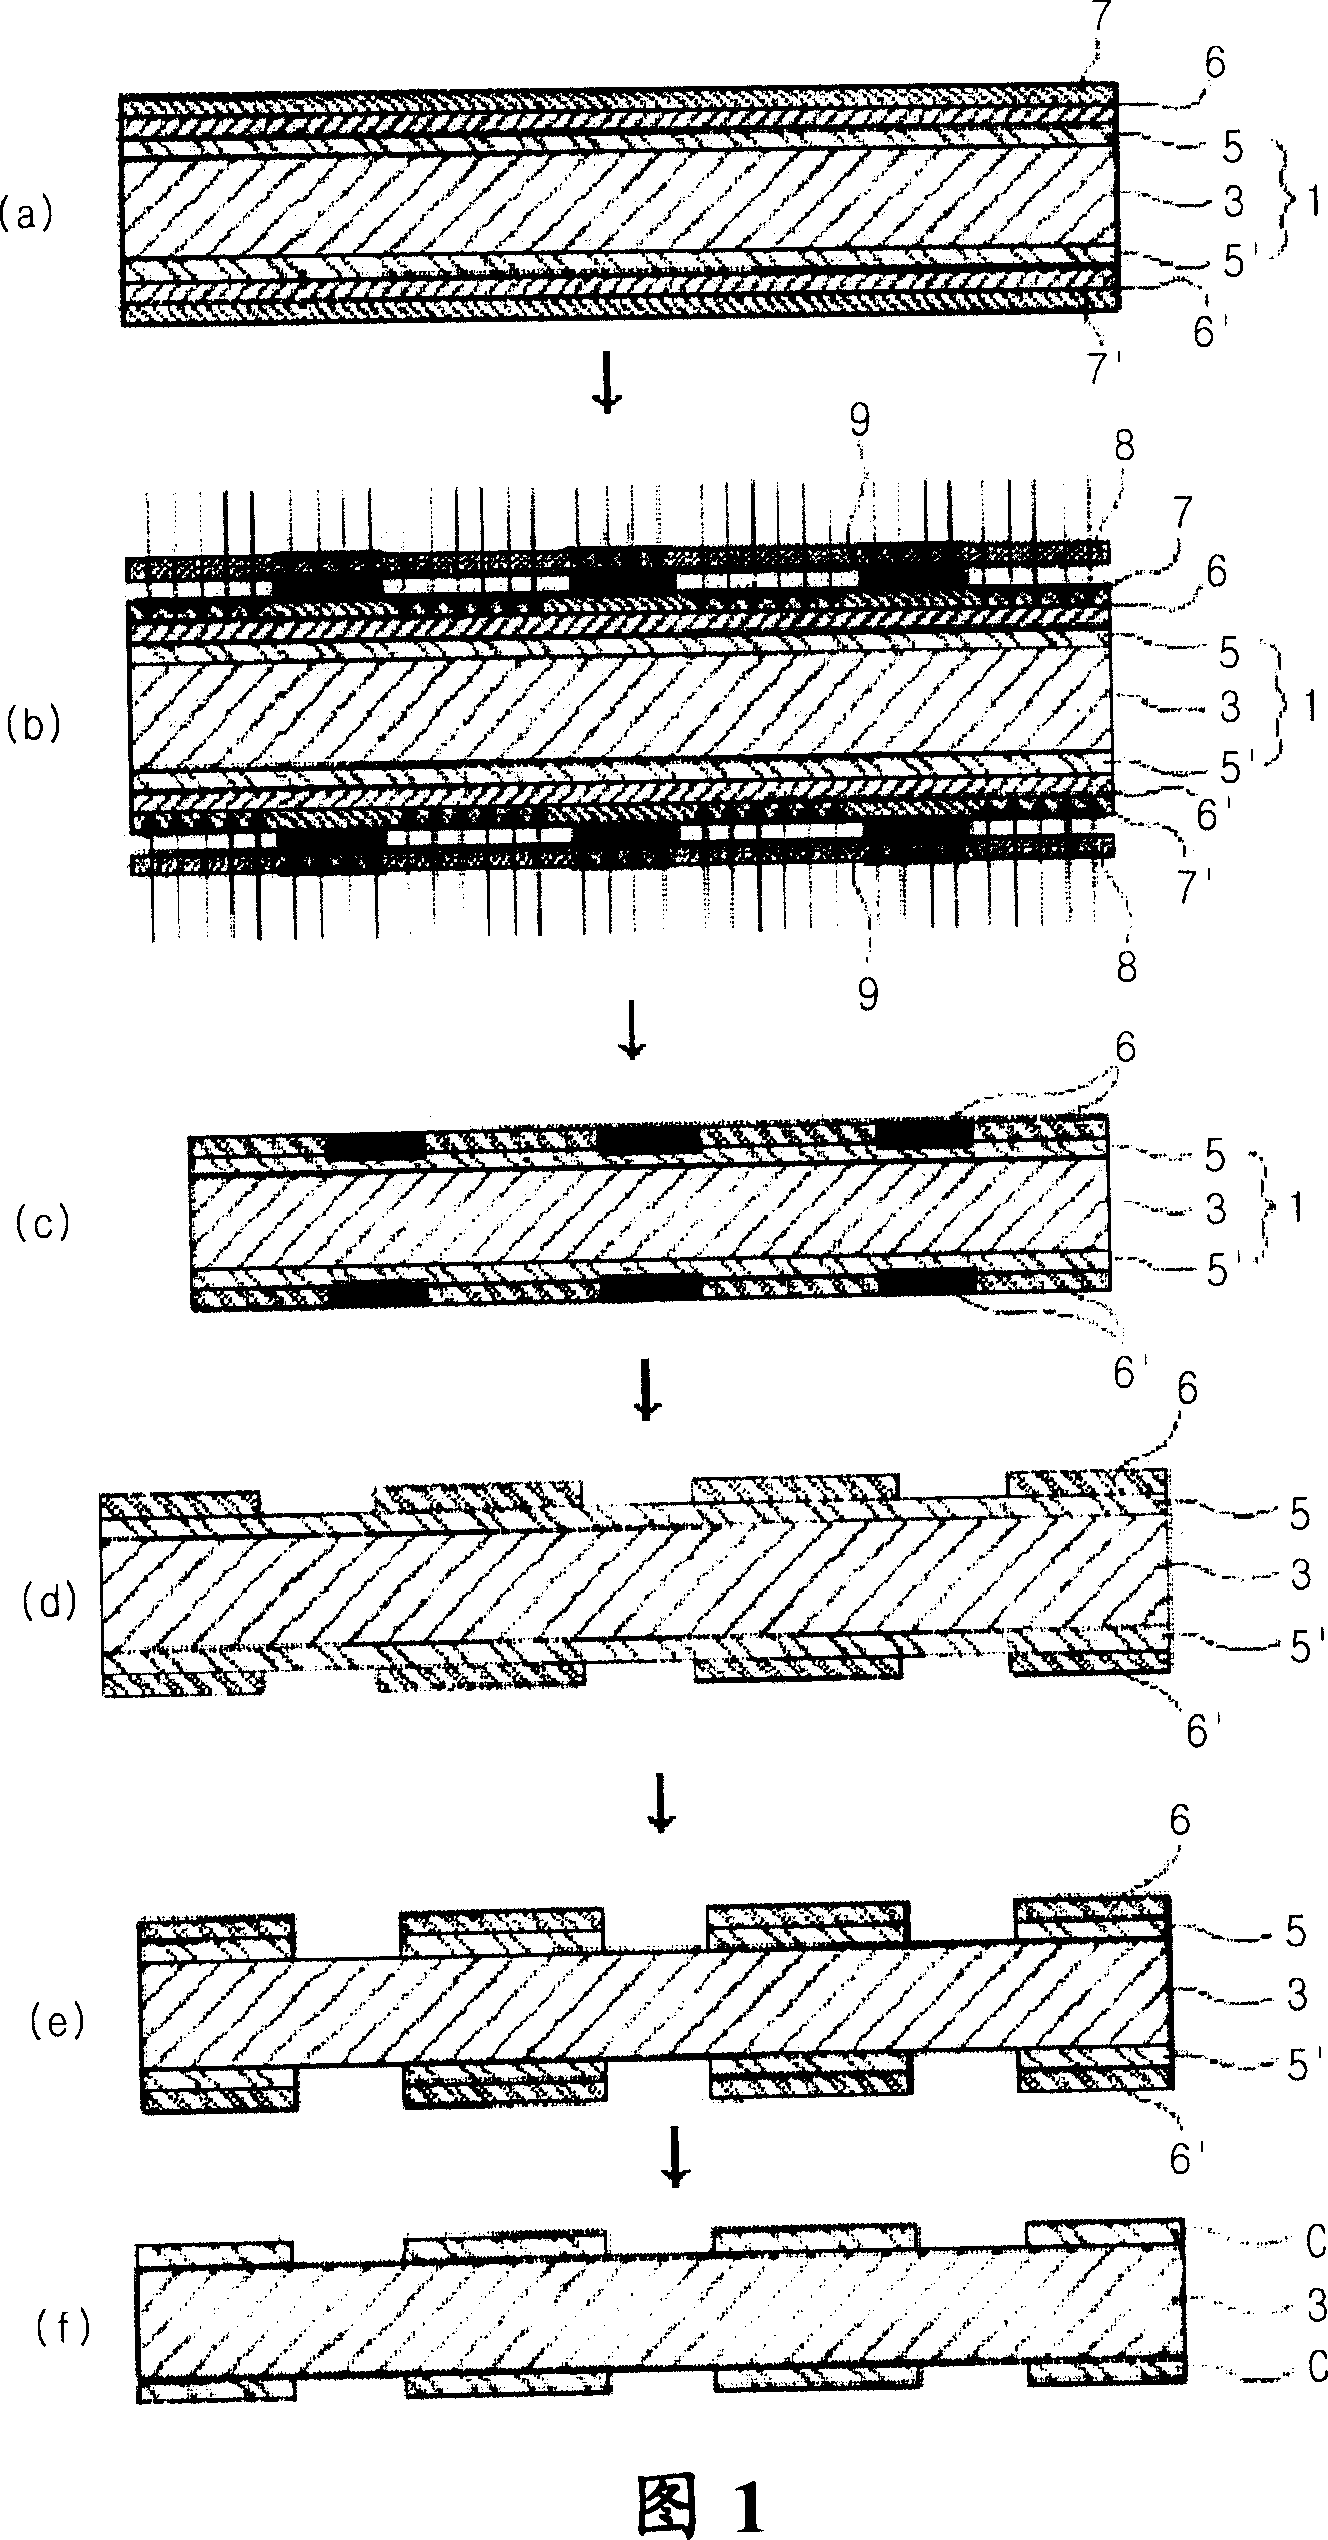 Method of forming circuit pattern on printed circuit board